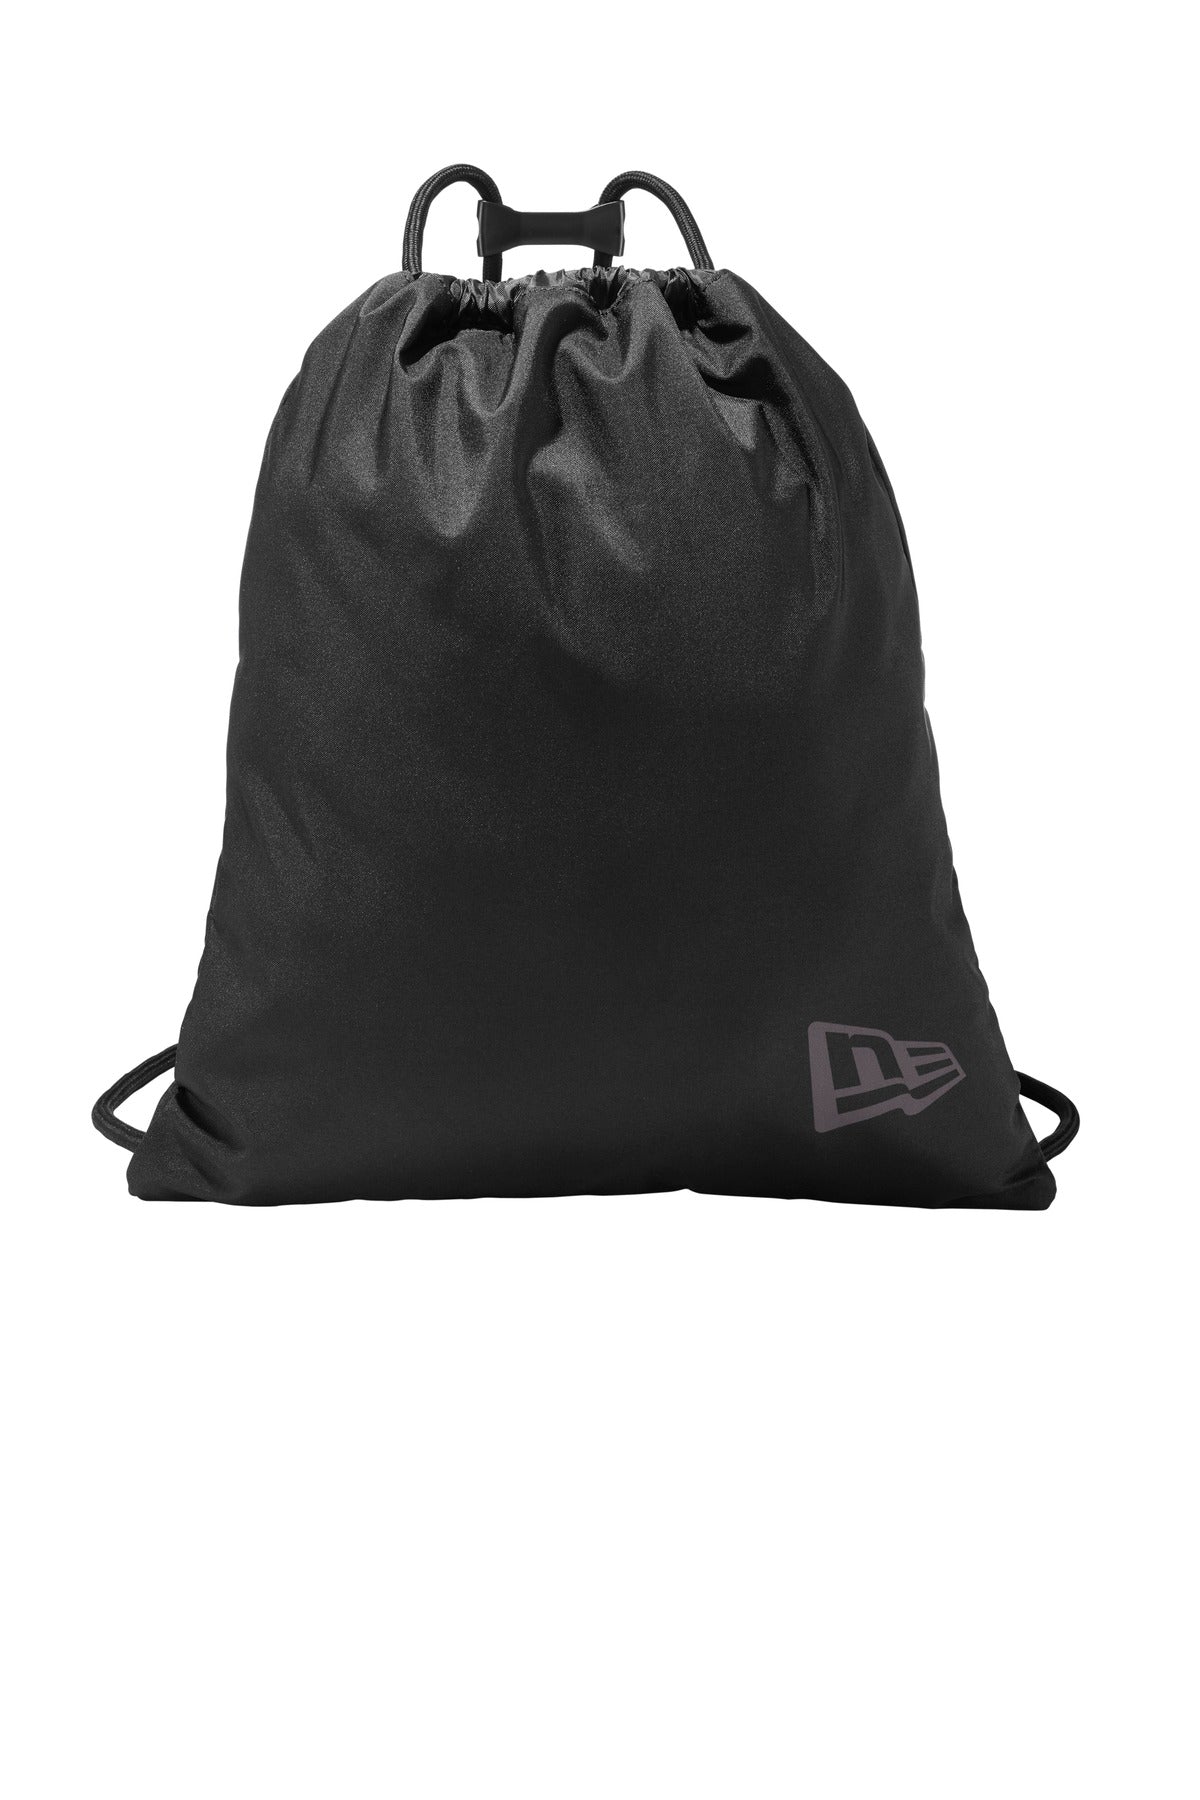 Bags Black OSFA New Era